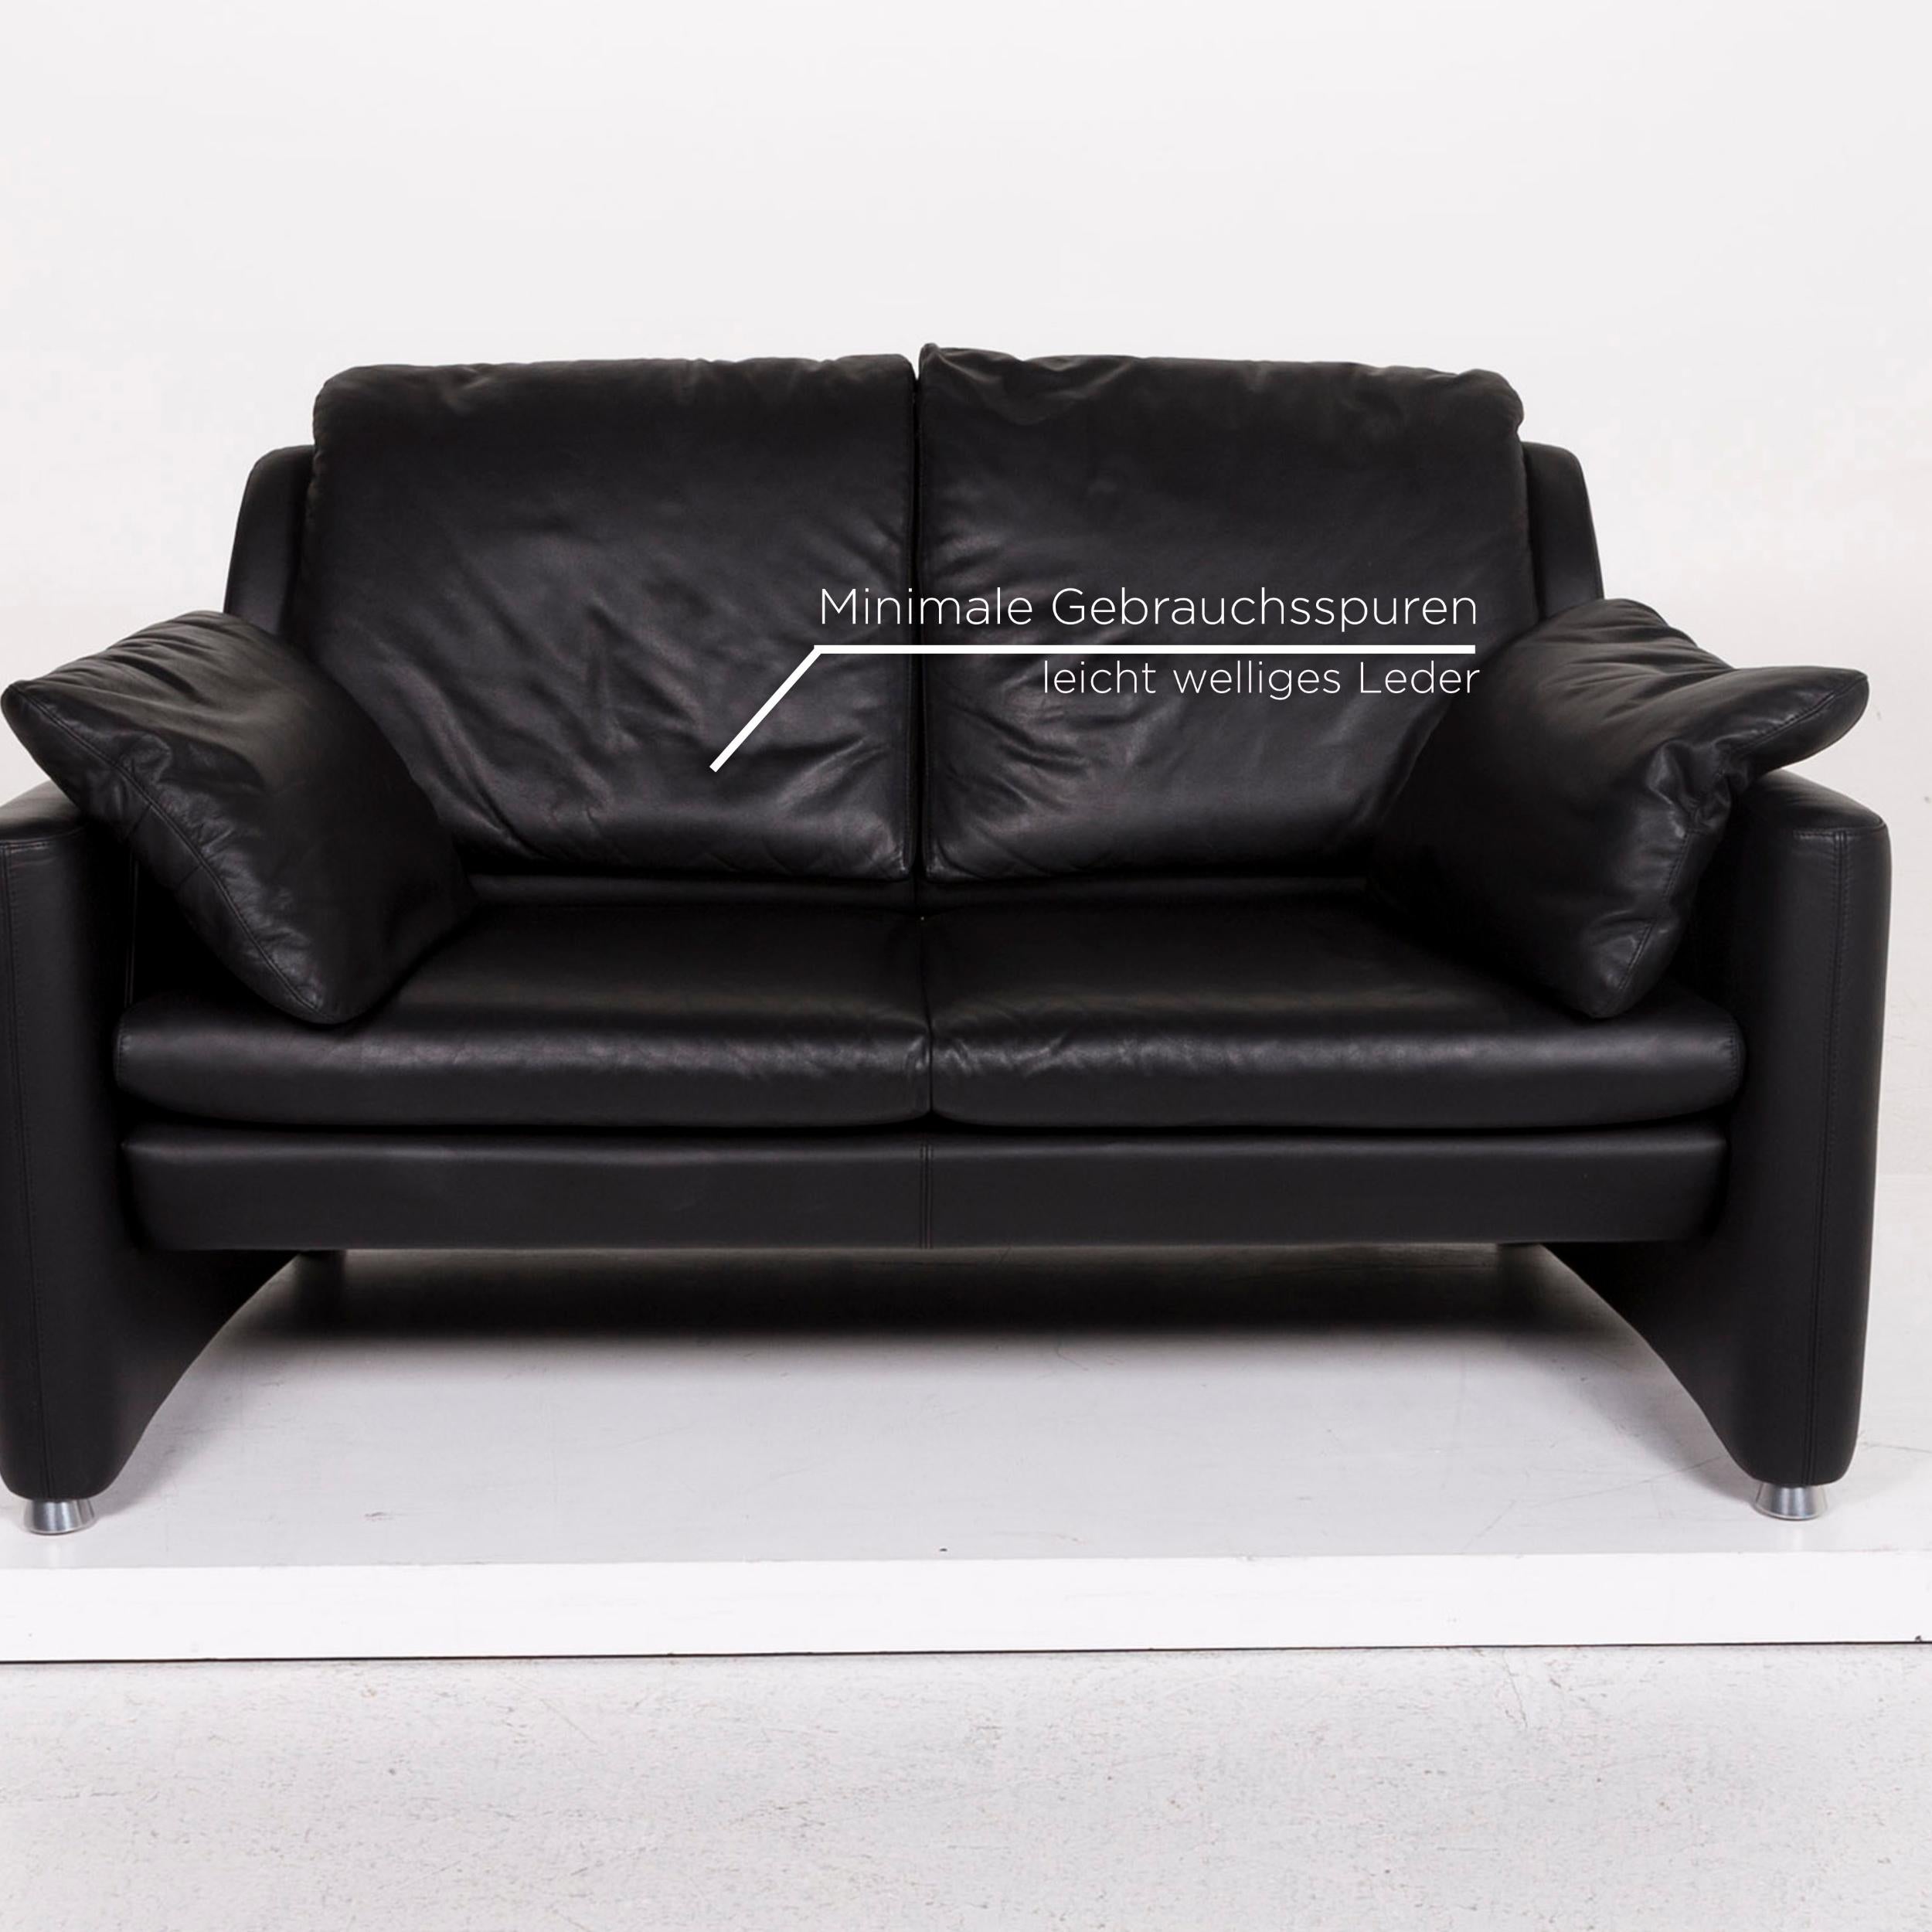 Dutch Leolux Fidamigo Leather Sofa Black Two-Seat Couch For Sale